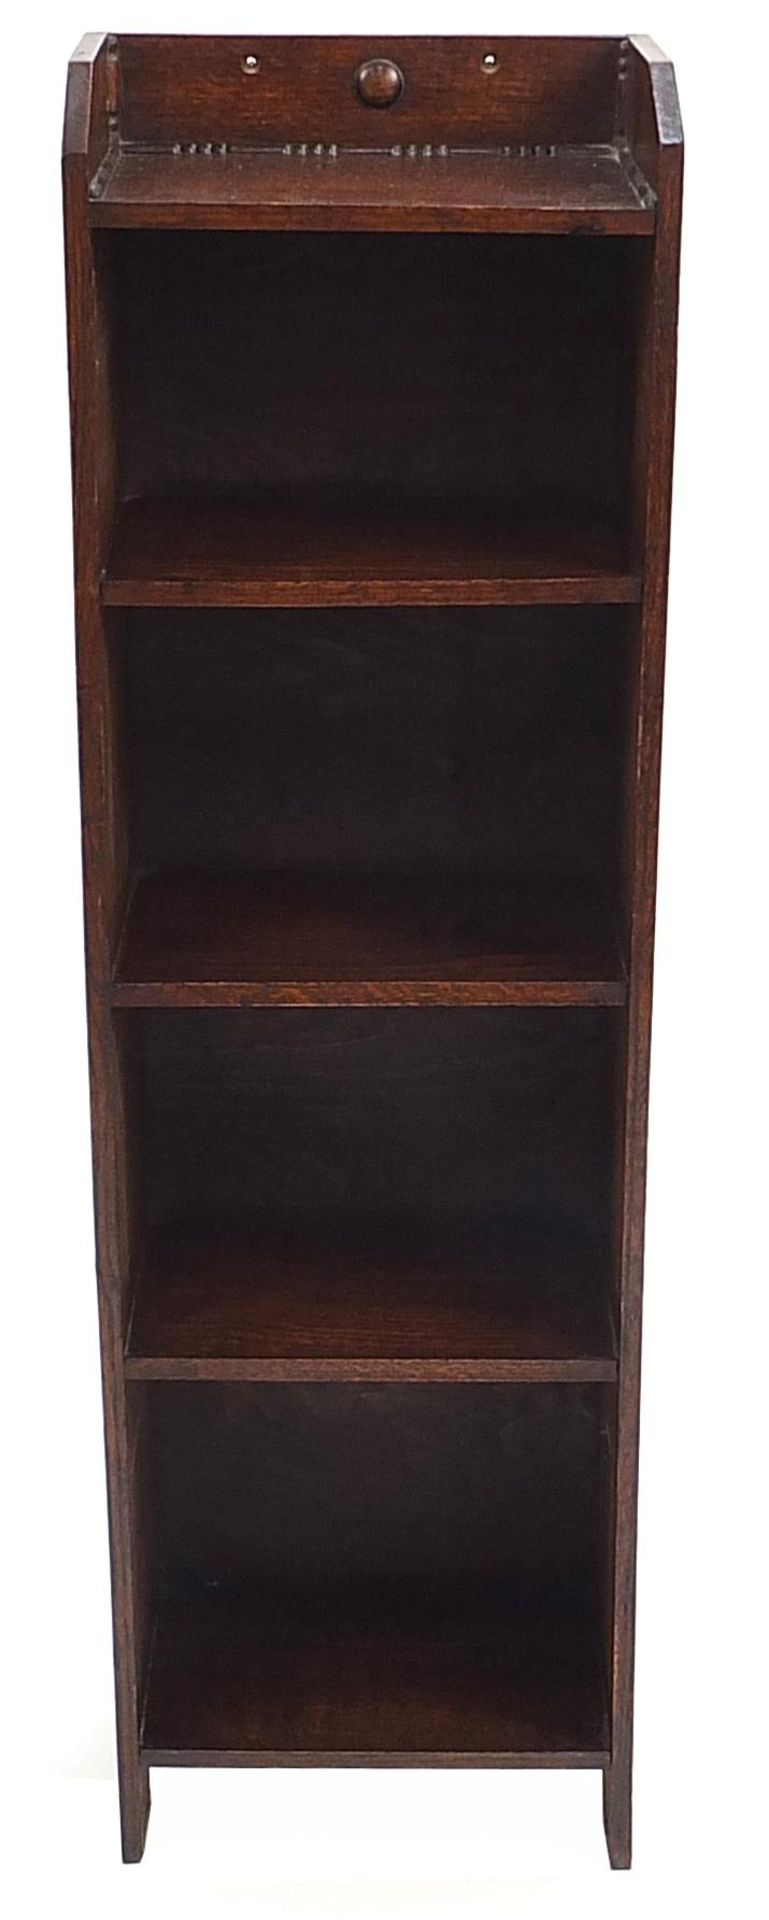 Manner of Liberty & Co, Arts & Crafts oak five shelf open bookcase, 106cm H x 30.5cm W x 19cm D - Image 2 of 3